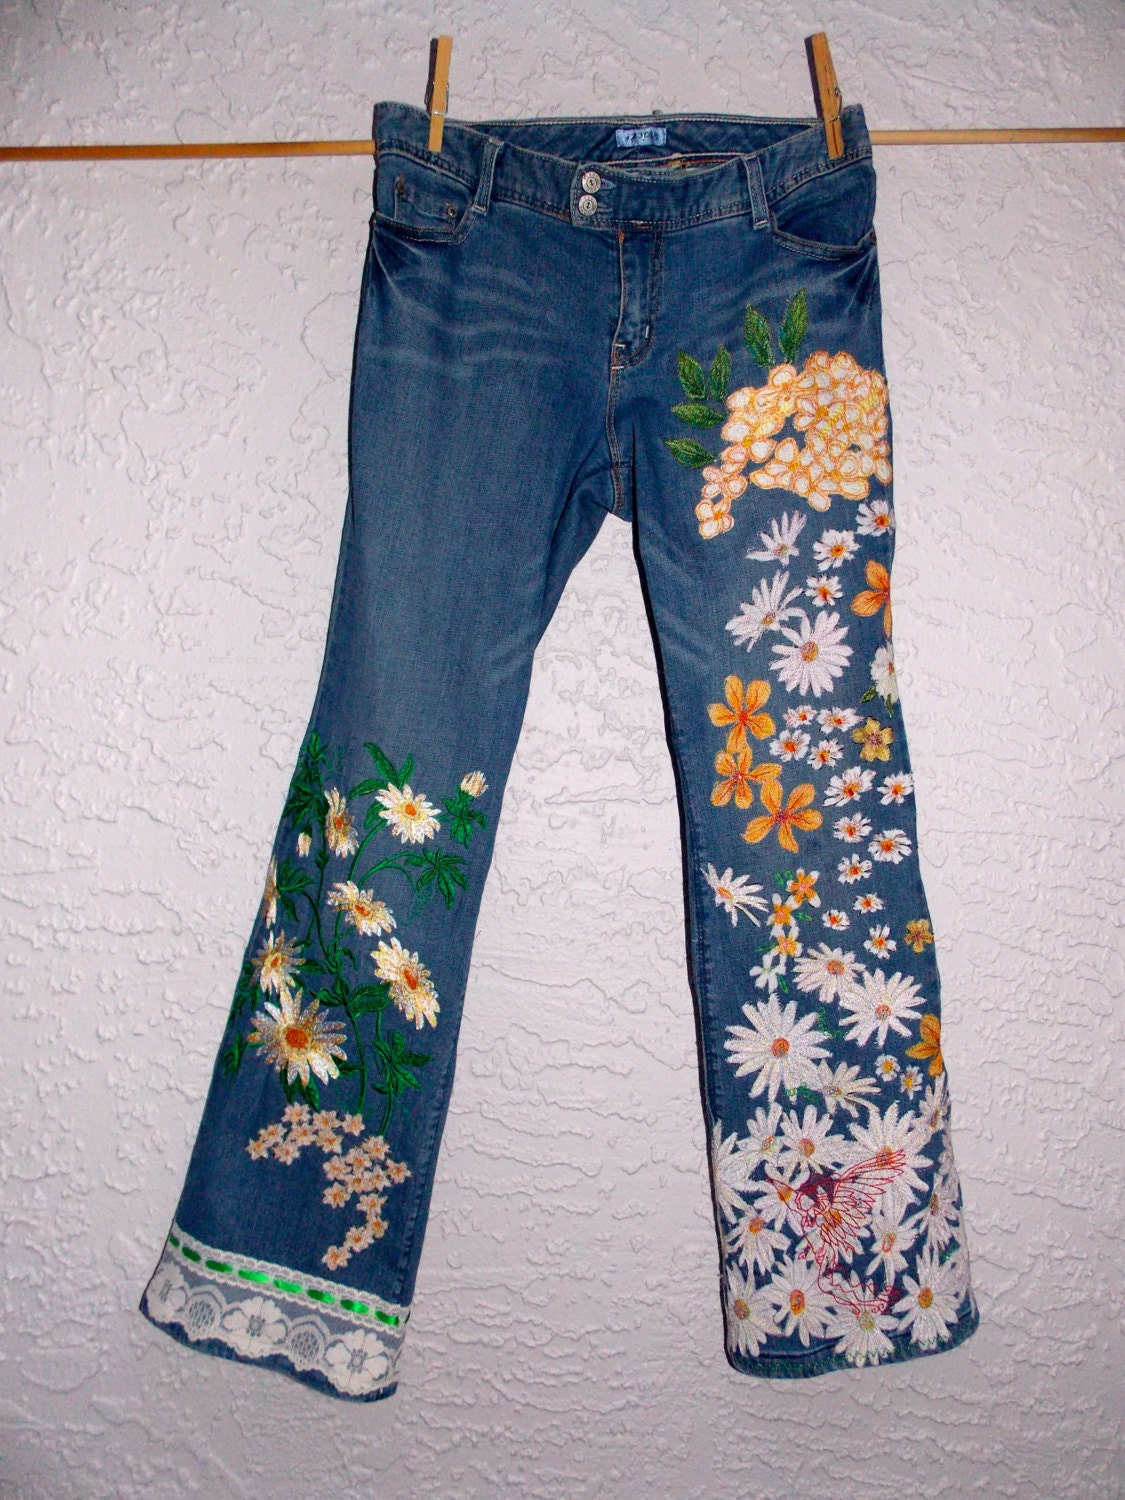 IZOD Jeans Floral Applique Thread Painted Machine